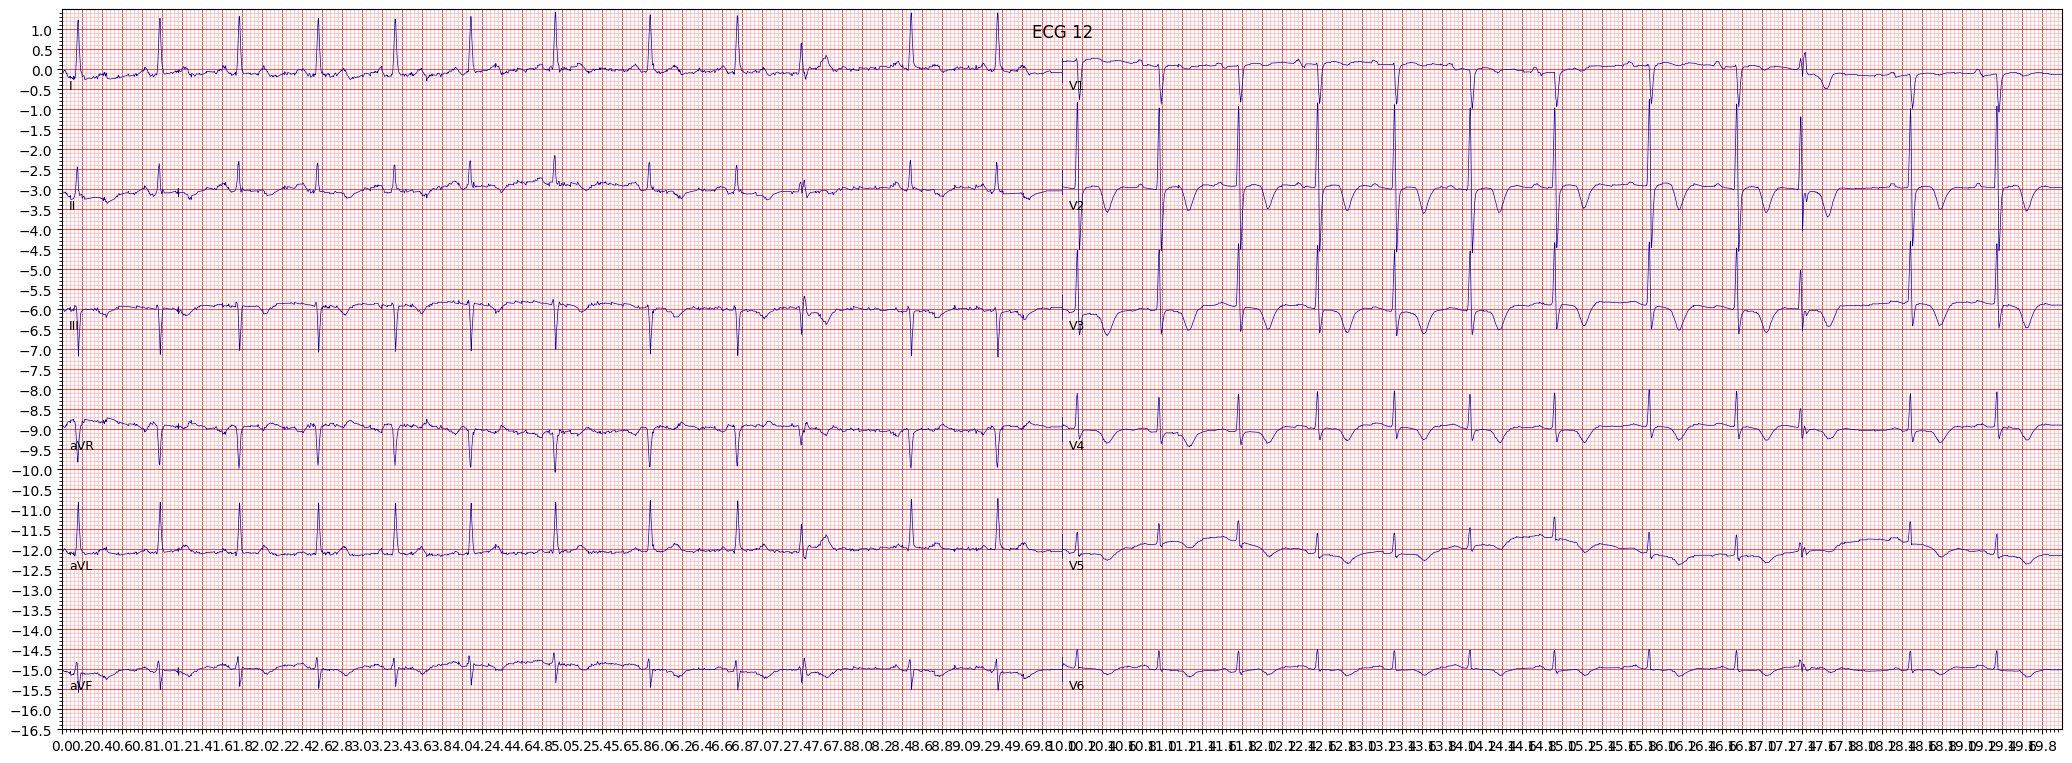 inferoposterolateral myocardial infarction (IPLMI) example 5053